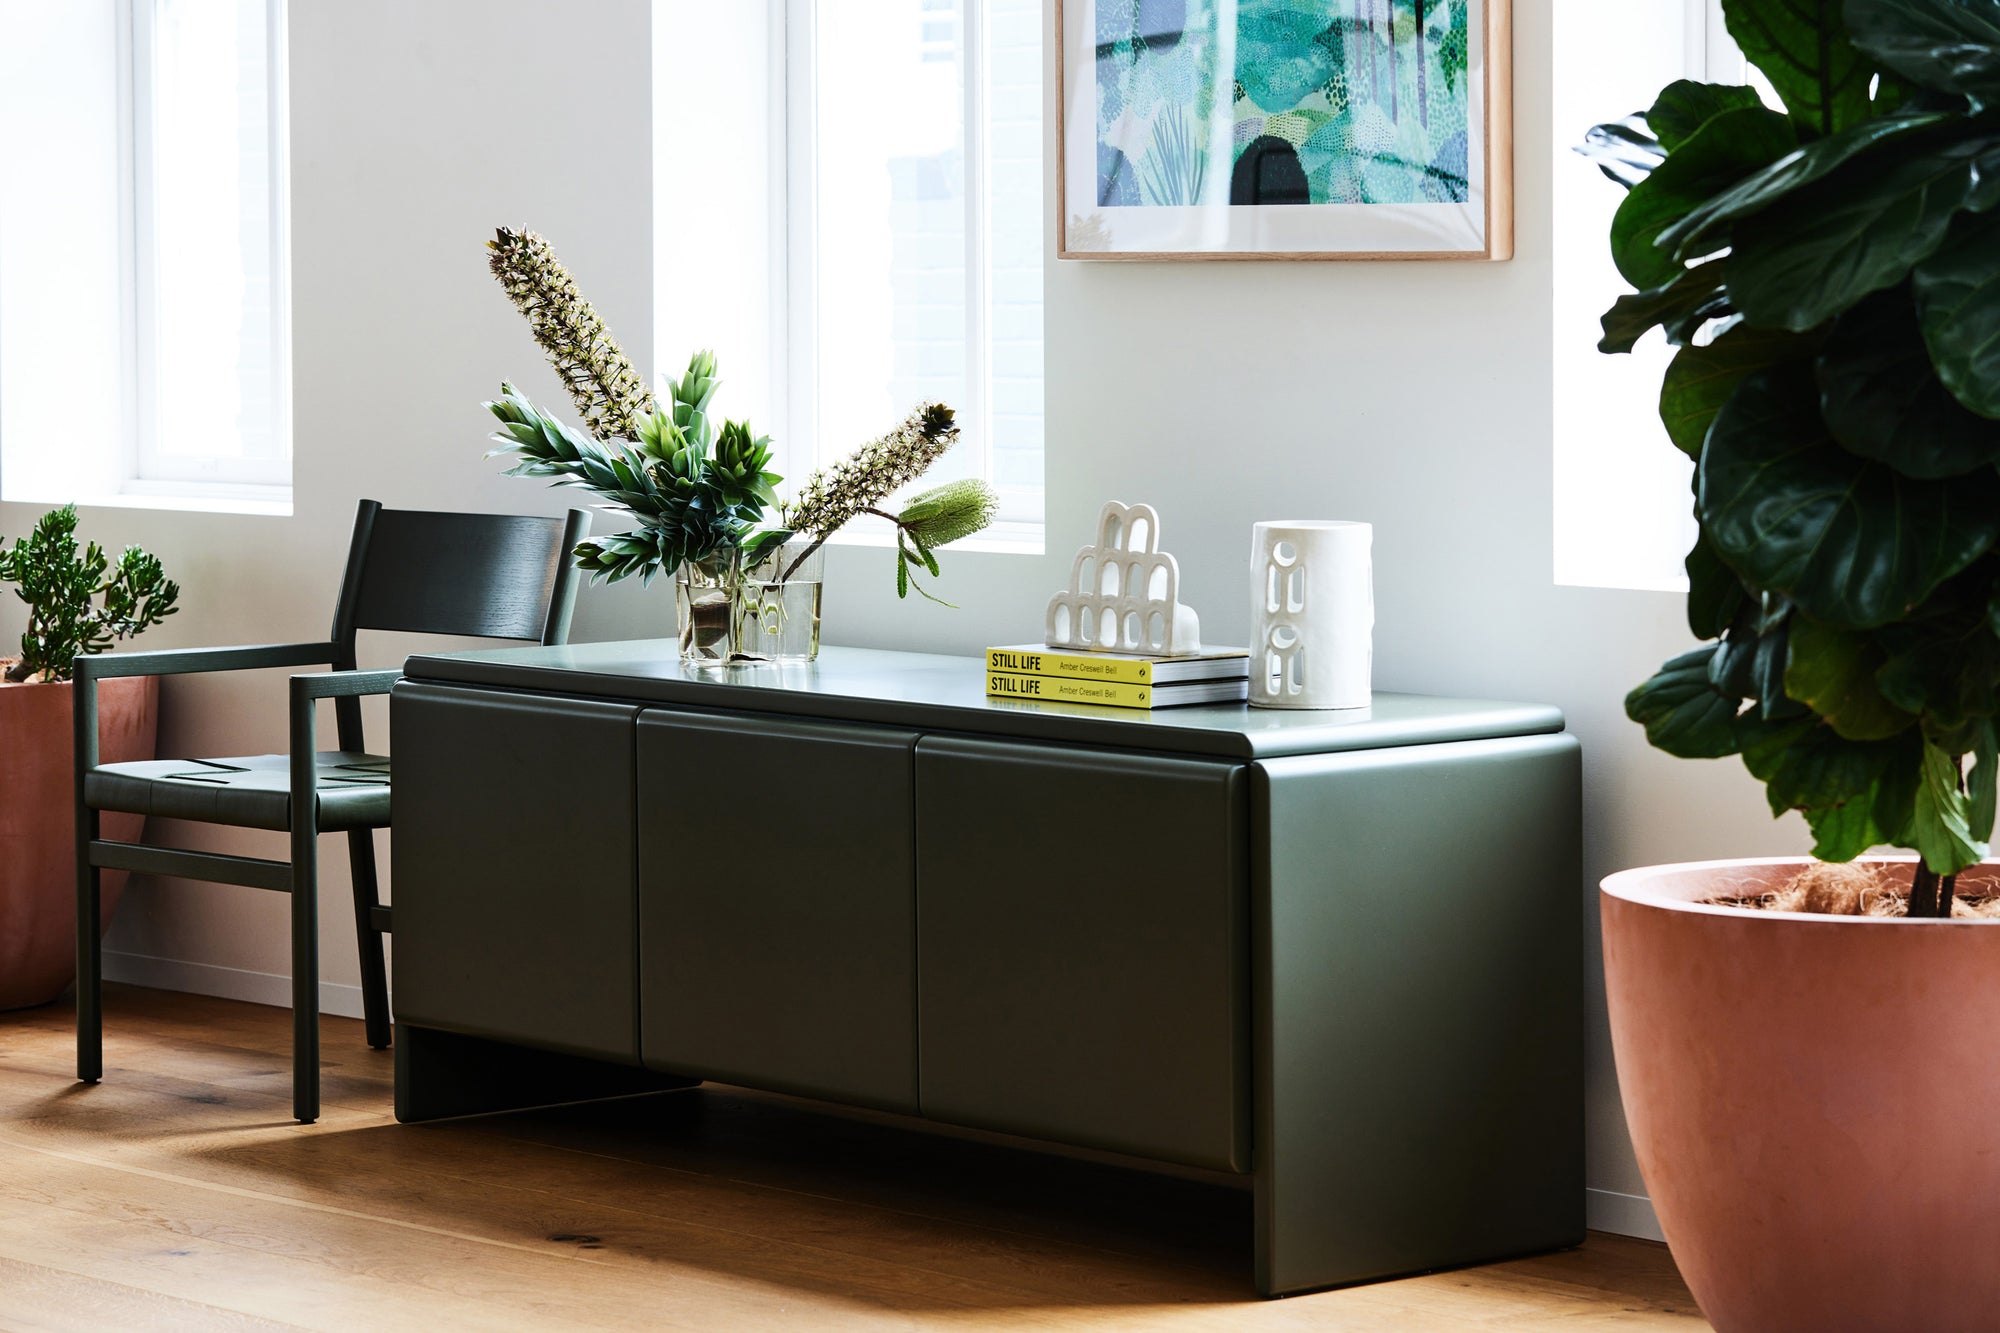 Jardan Furniture Olive Sideboard Range